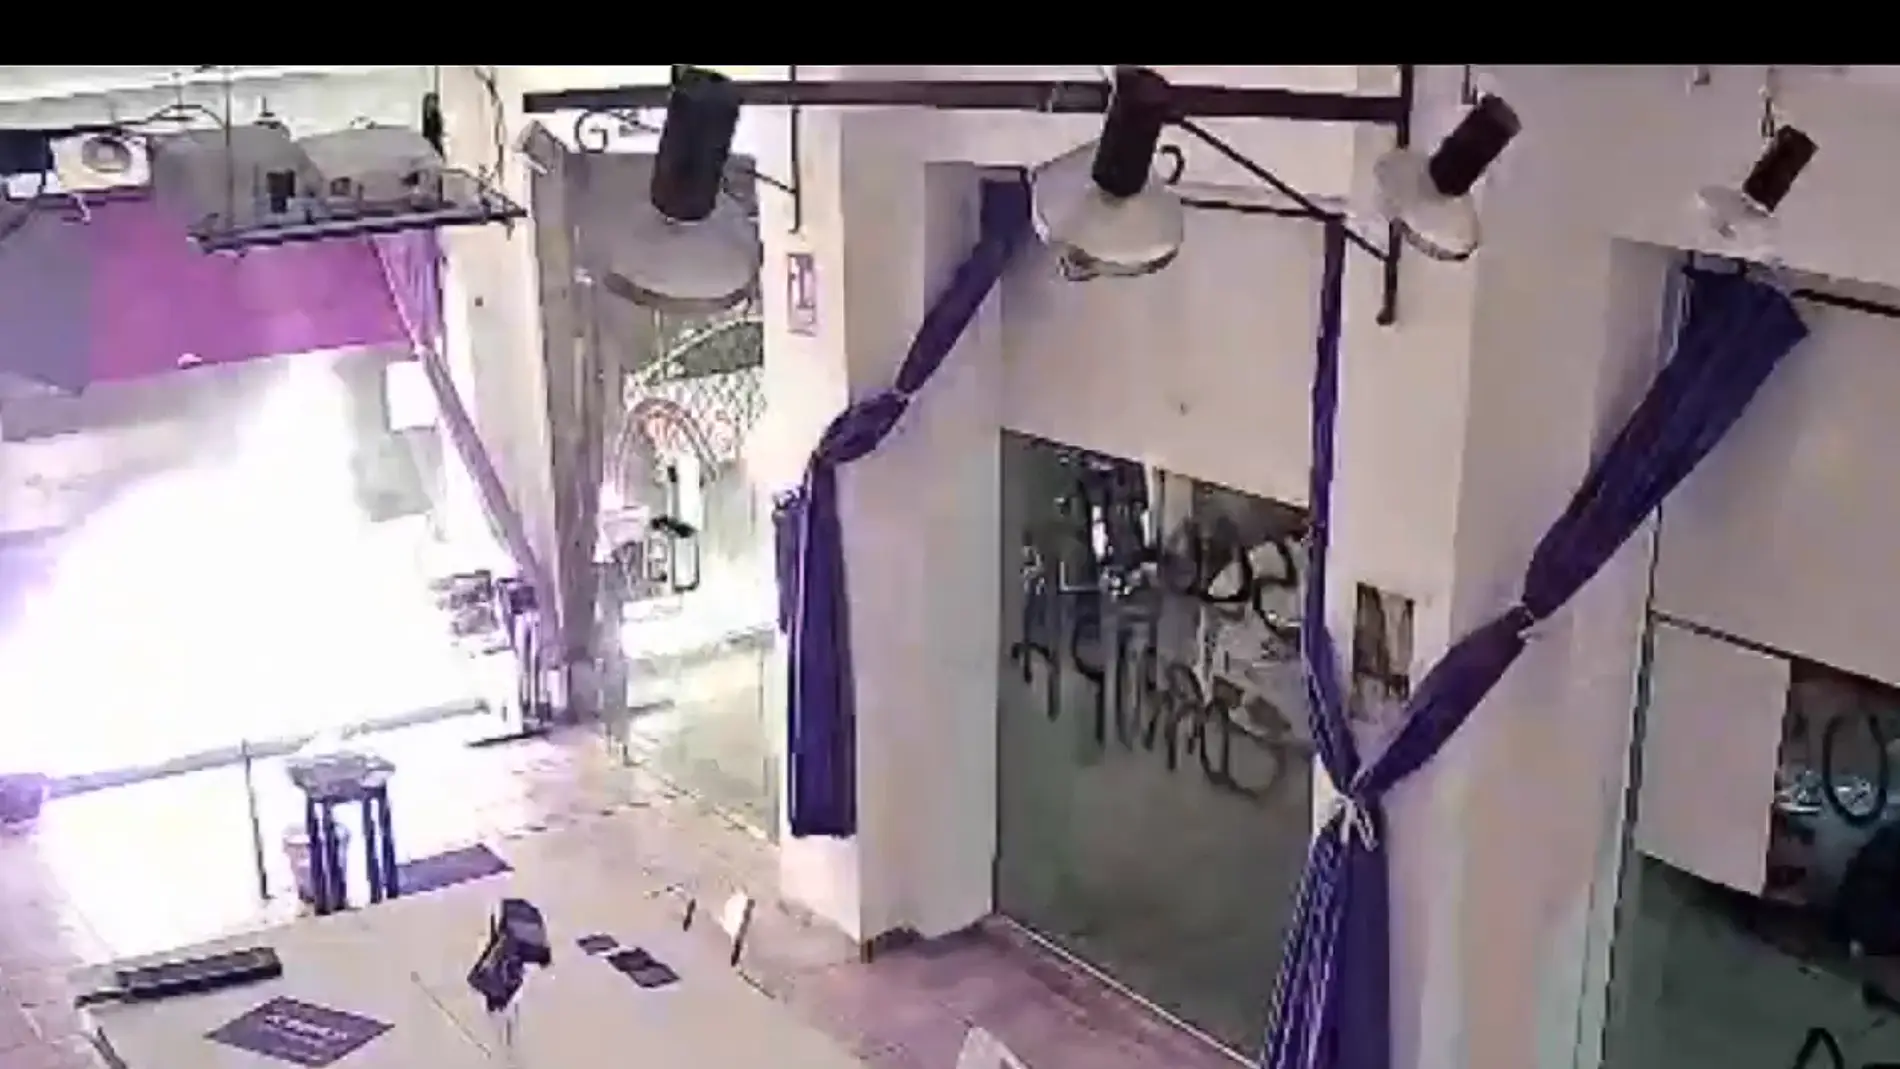 Atacan e incendian la sede de Podemos en Cartagena con material explosivo